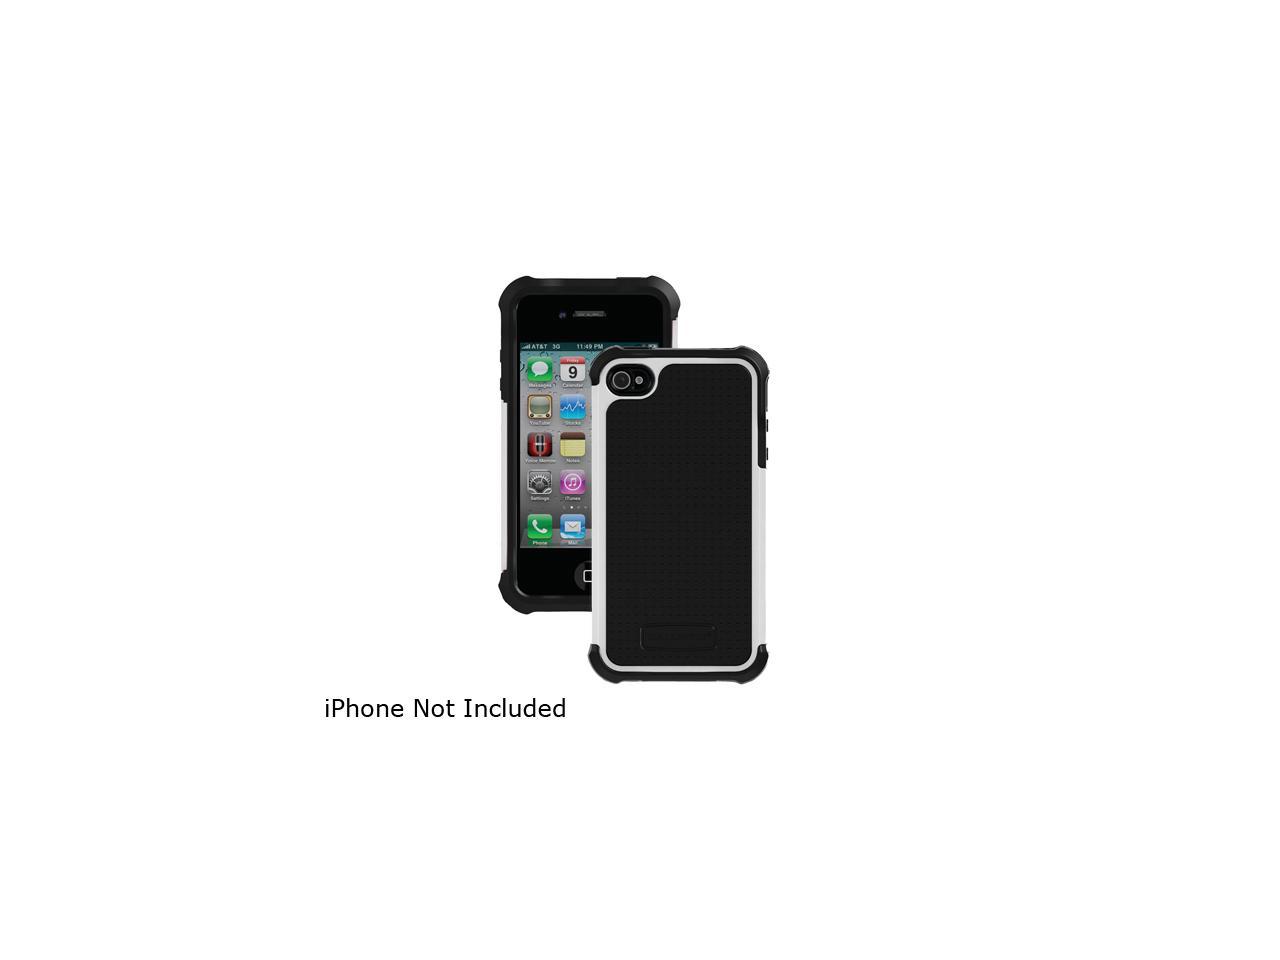 Ballistic Case Black / White SG Case For iPhone 4/4S SA0582-M385 ...